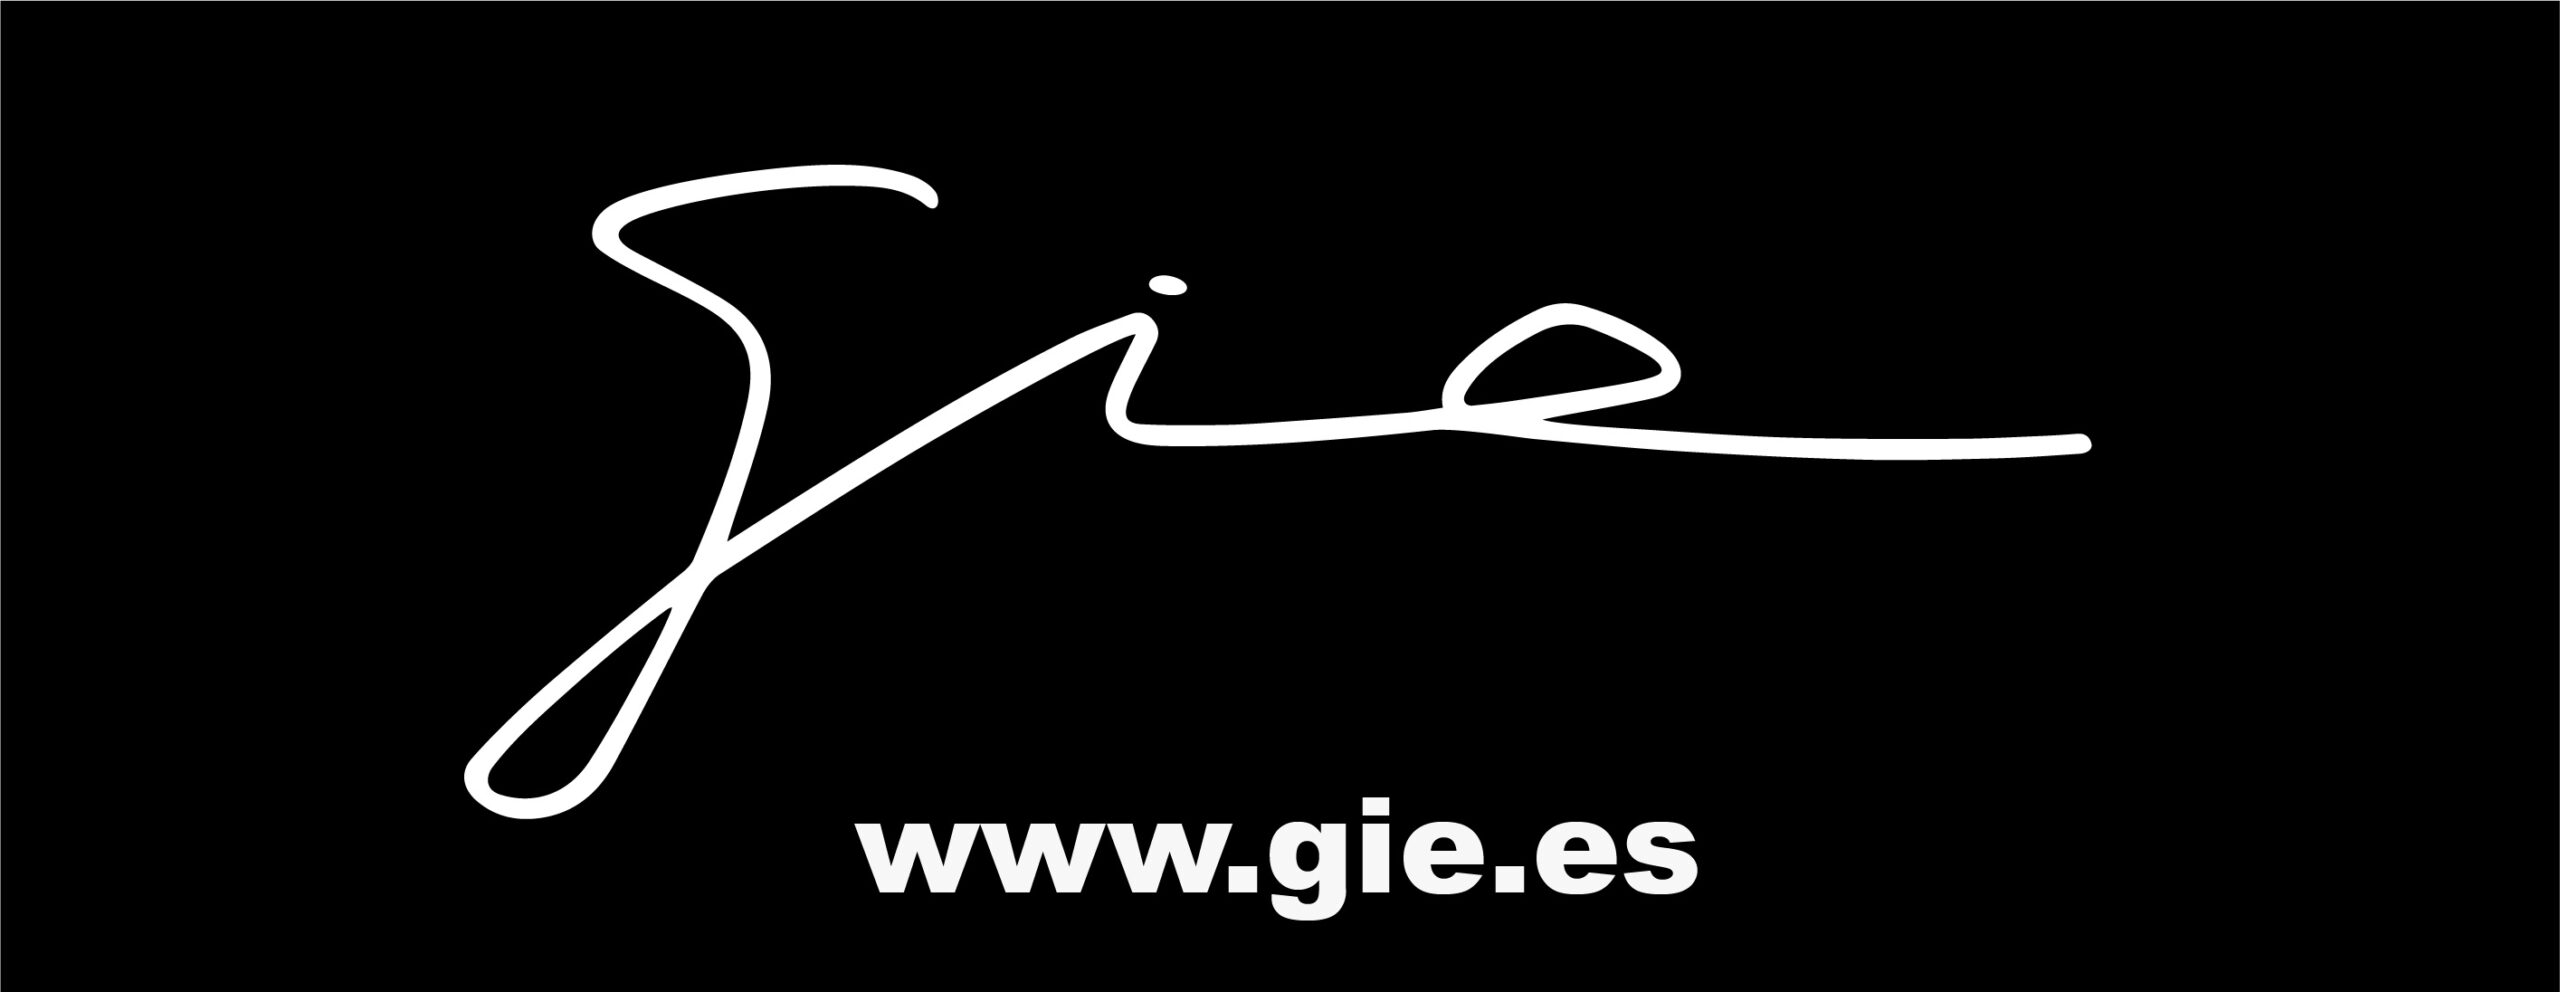 www.gie.es